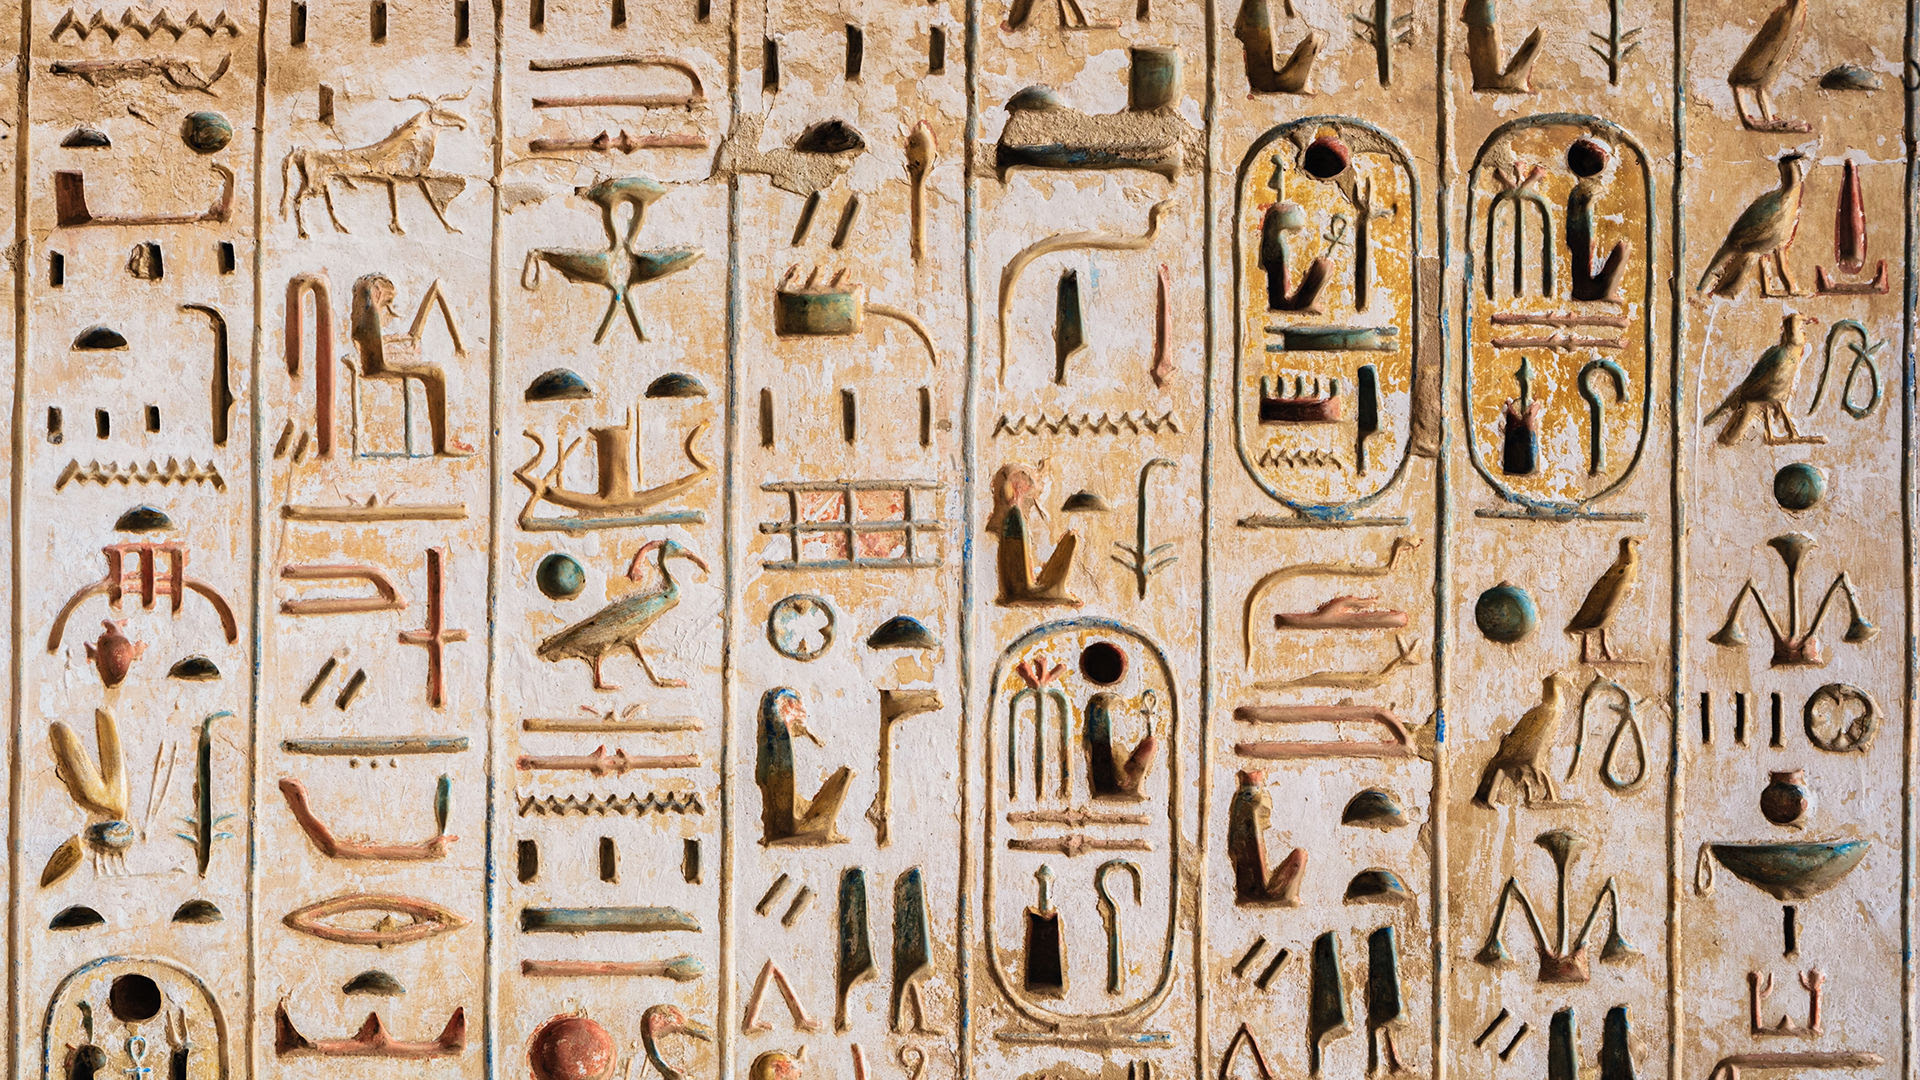 Letras en egipto